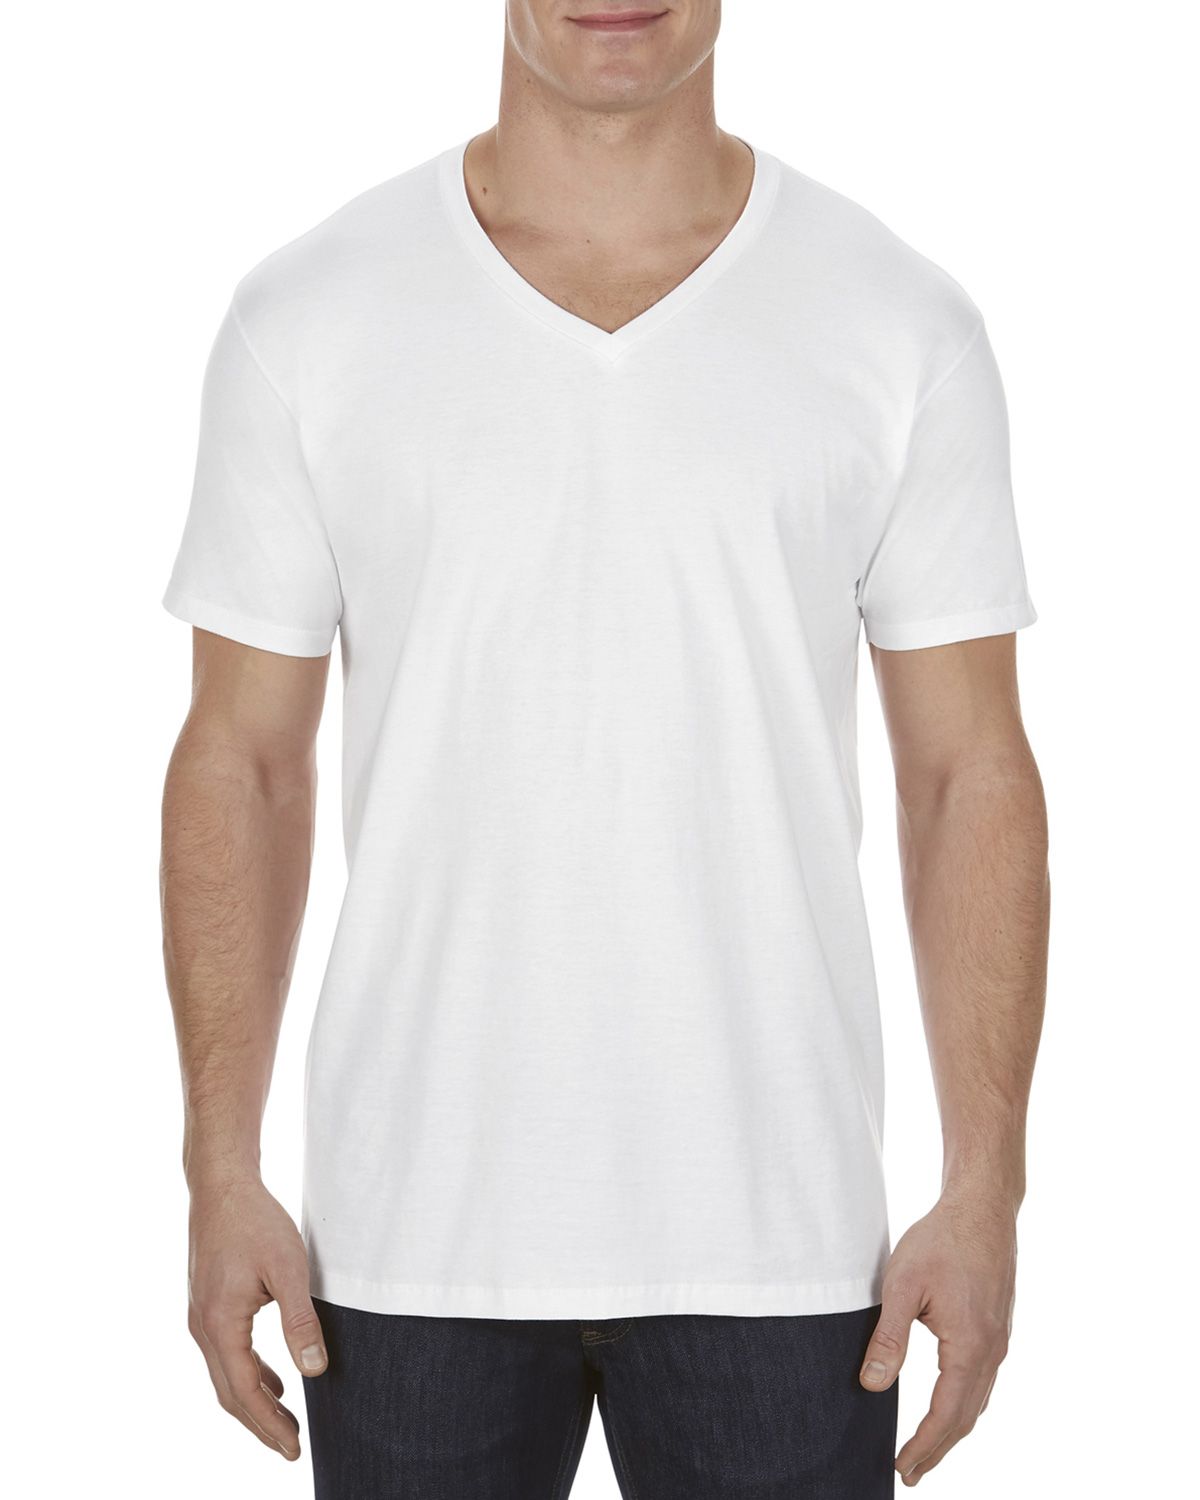 Alstyle AL5300 Men's 4.3 oz. Ringspun Cotton V-Neck T-Shirt